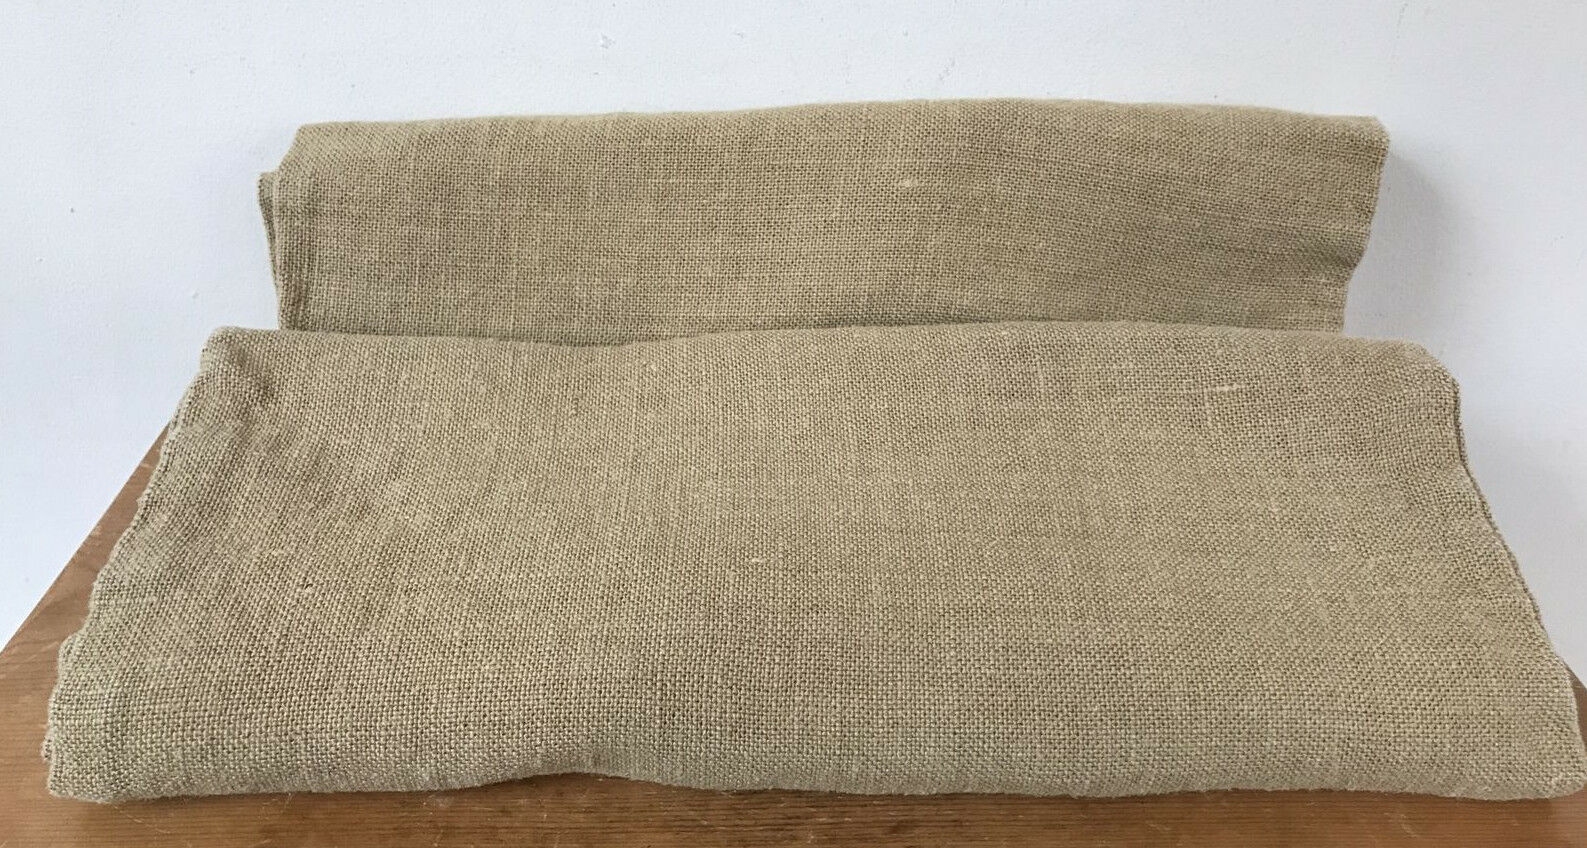 Pair IKEA Helgonort Burlap Jute Cotton Woven Brown Throw Pillow Covers 24"x15" - $29.99